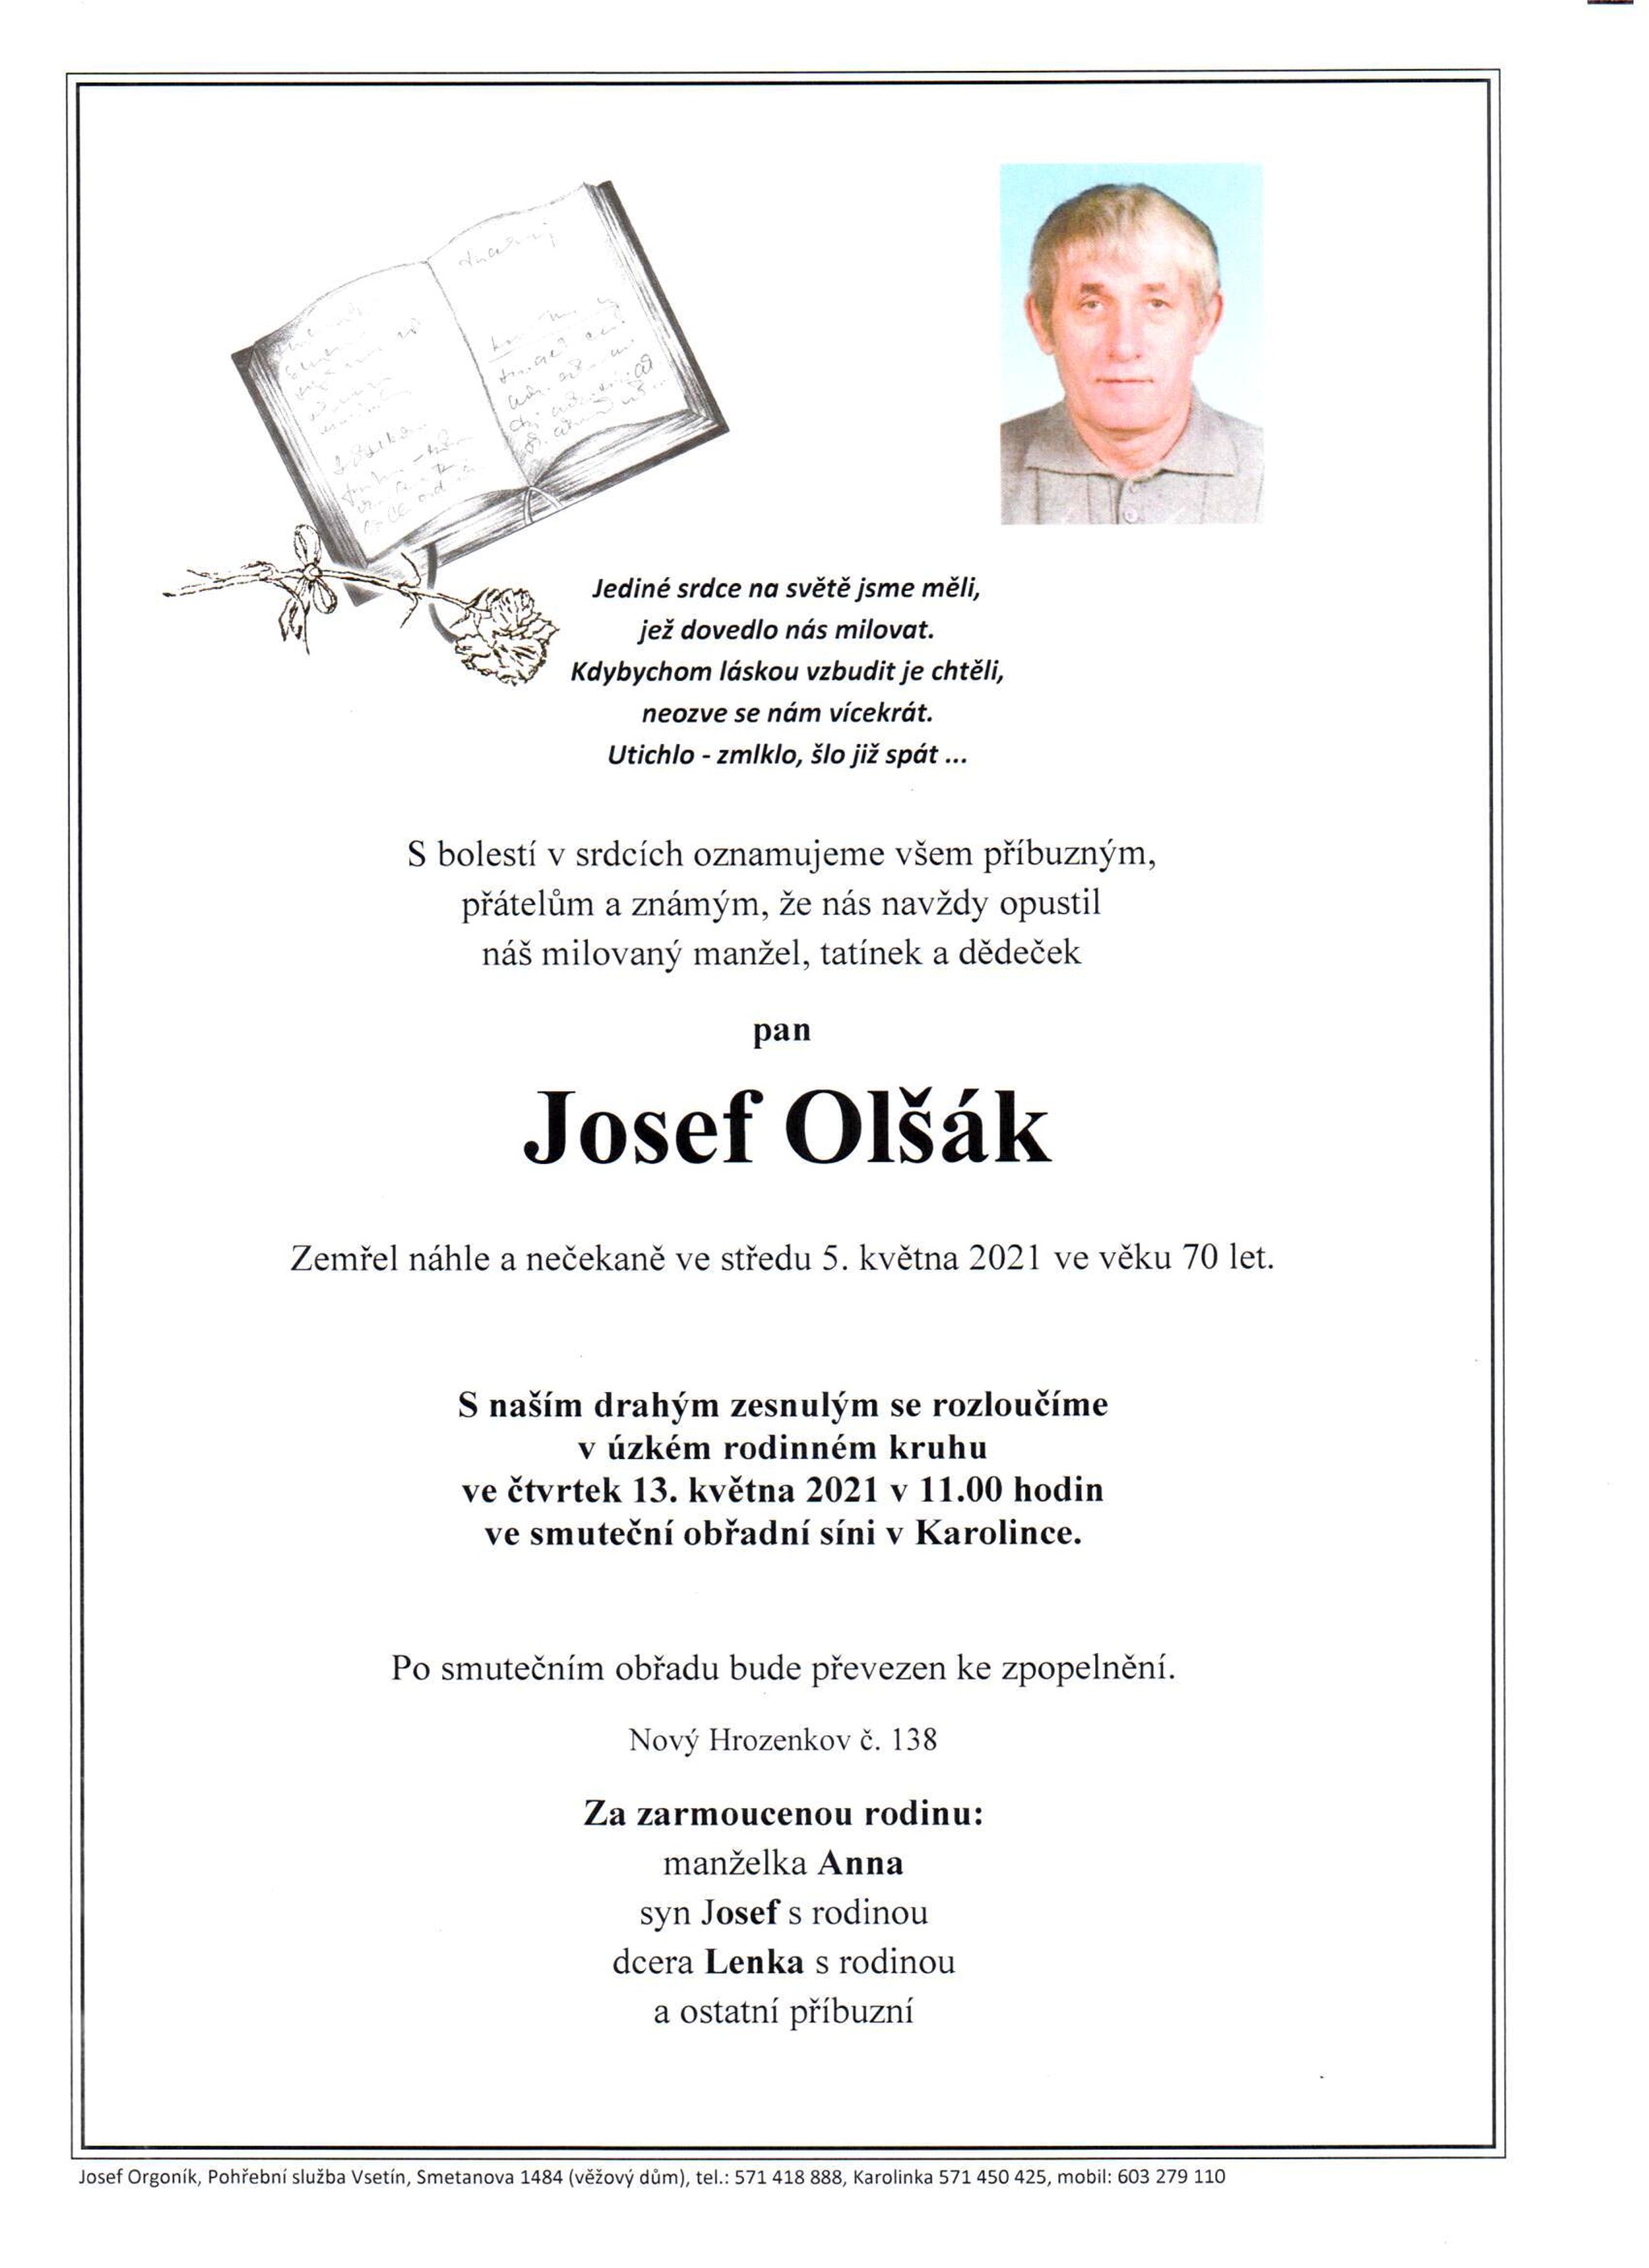 Josef Olšák